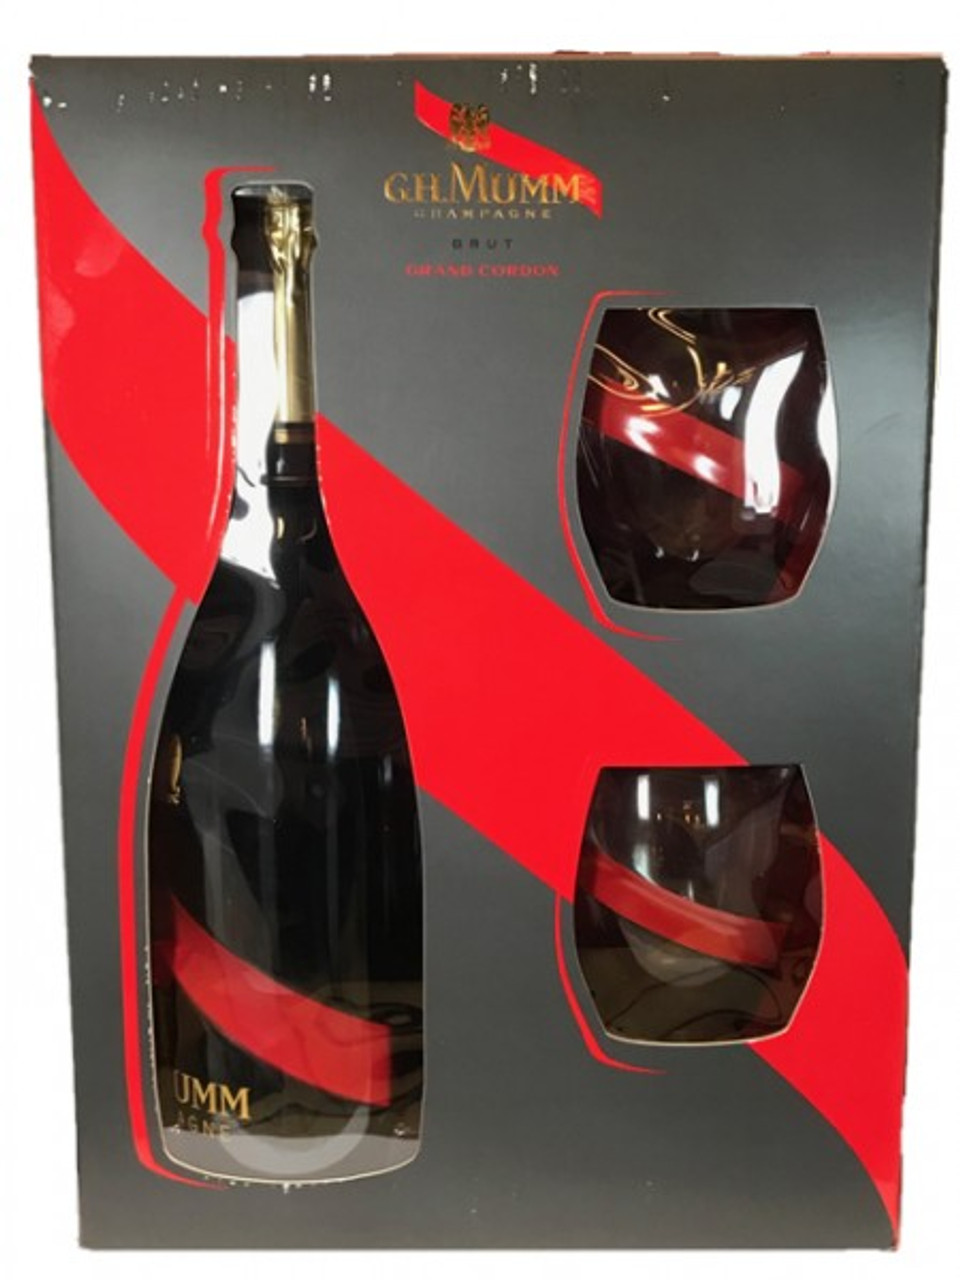 https://cdn11.bigcommerce.com/s-ff6e5/images/stencil/1280x1280/products/10694/4901/gh-mumm-cordon-rouge-grand-cordon-brut-champagne-w-2-glasses_1__85663.1662583870.jpg?c=2